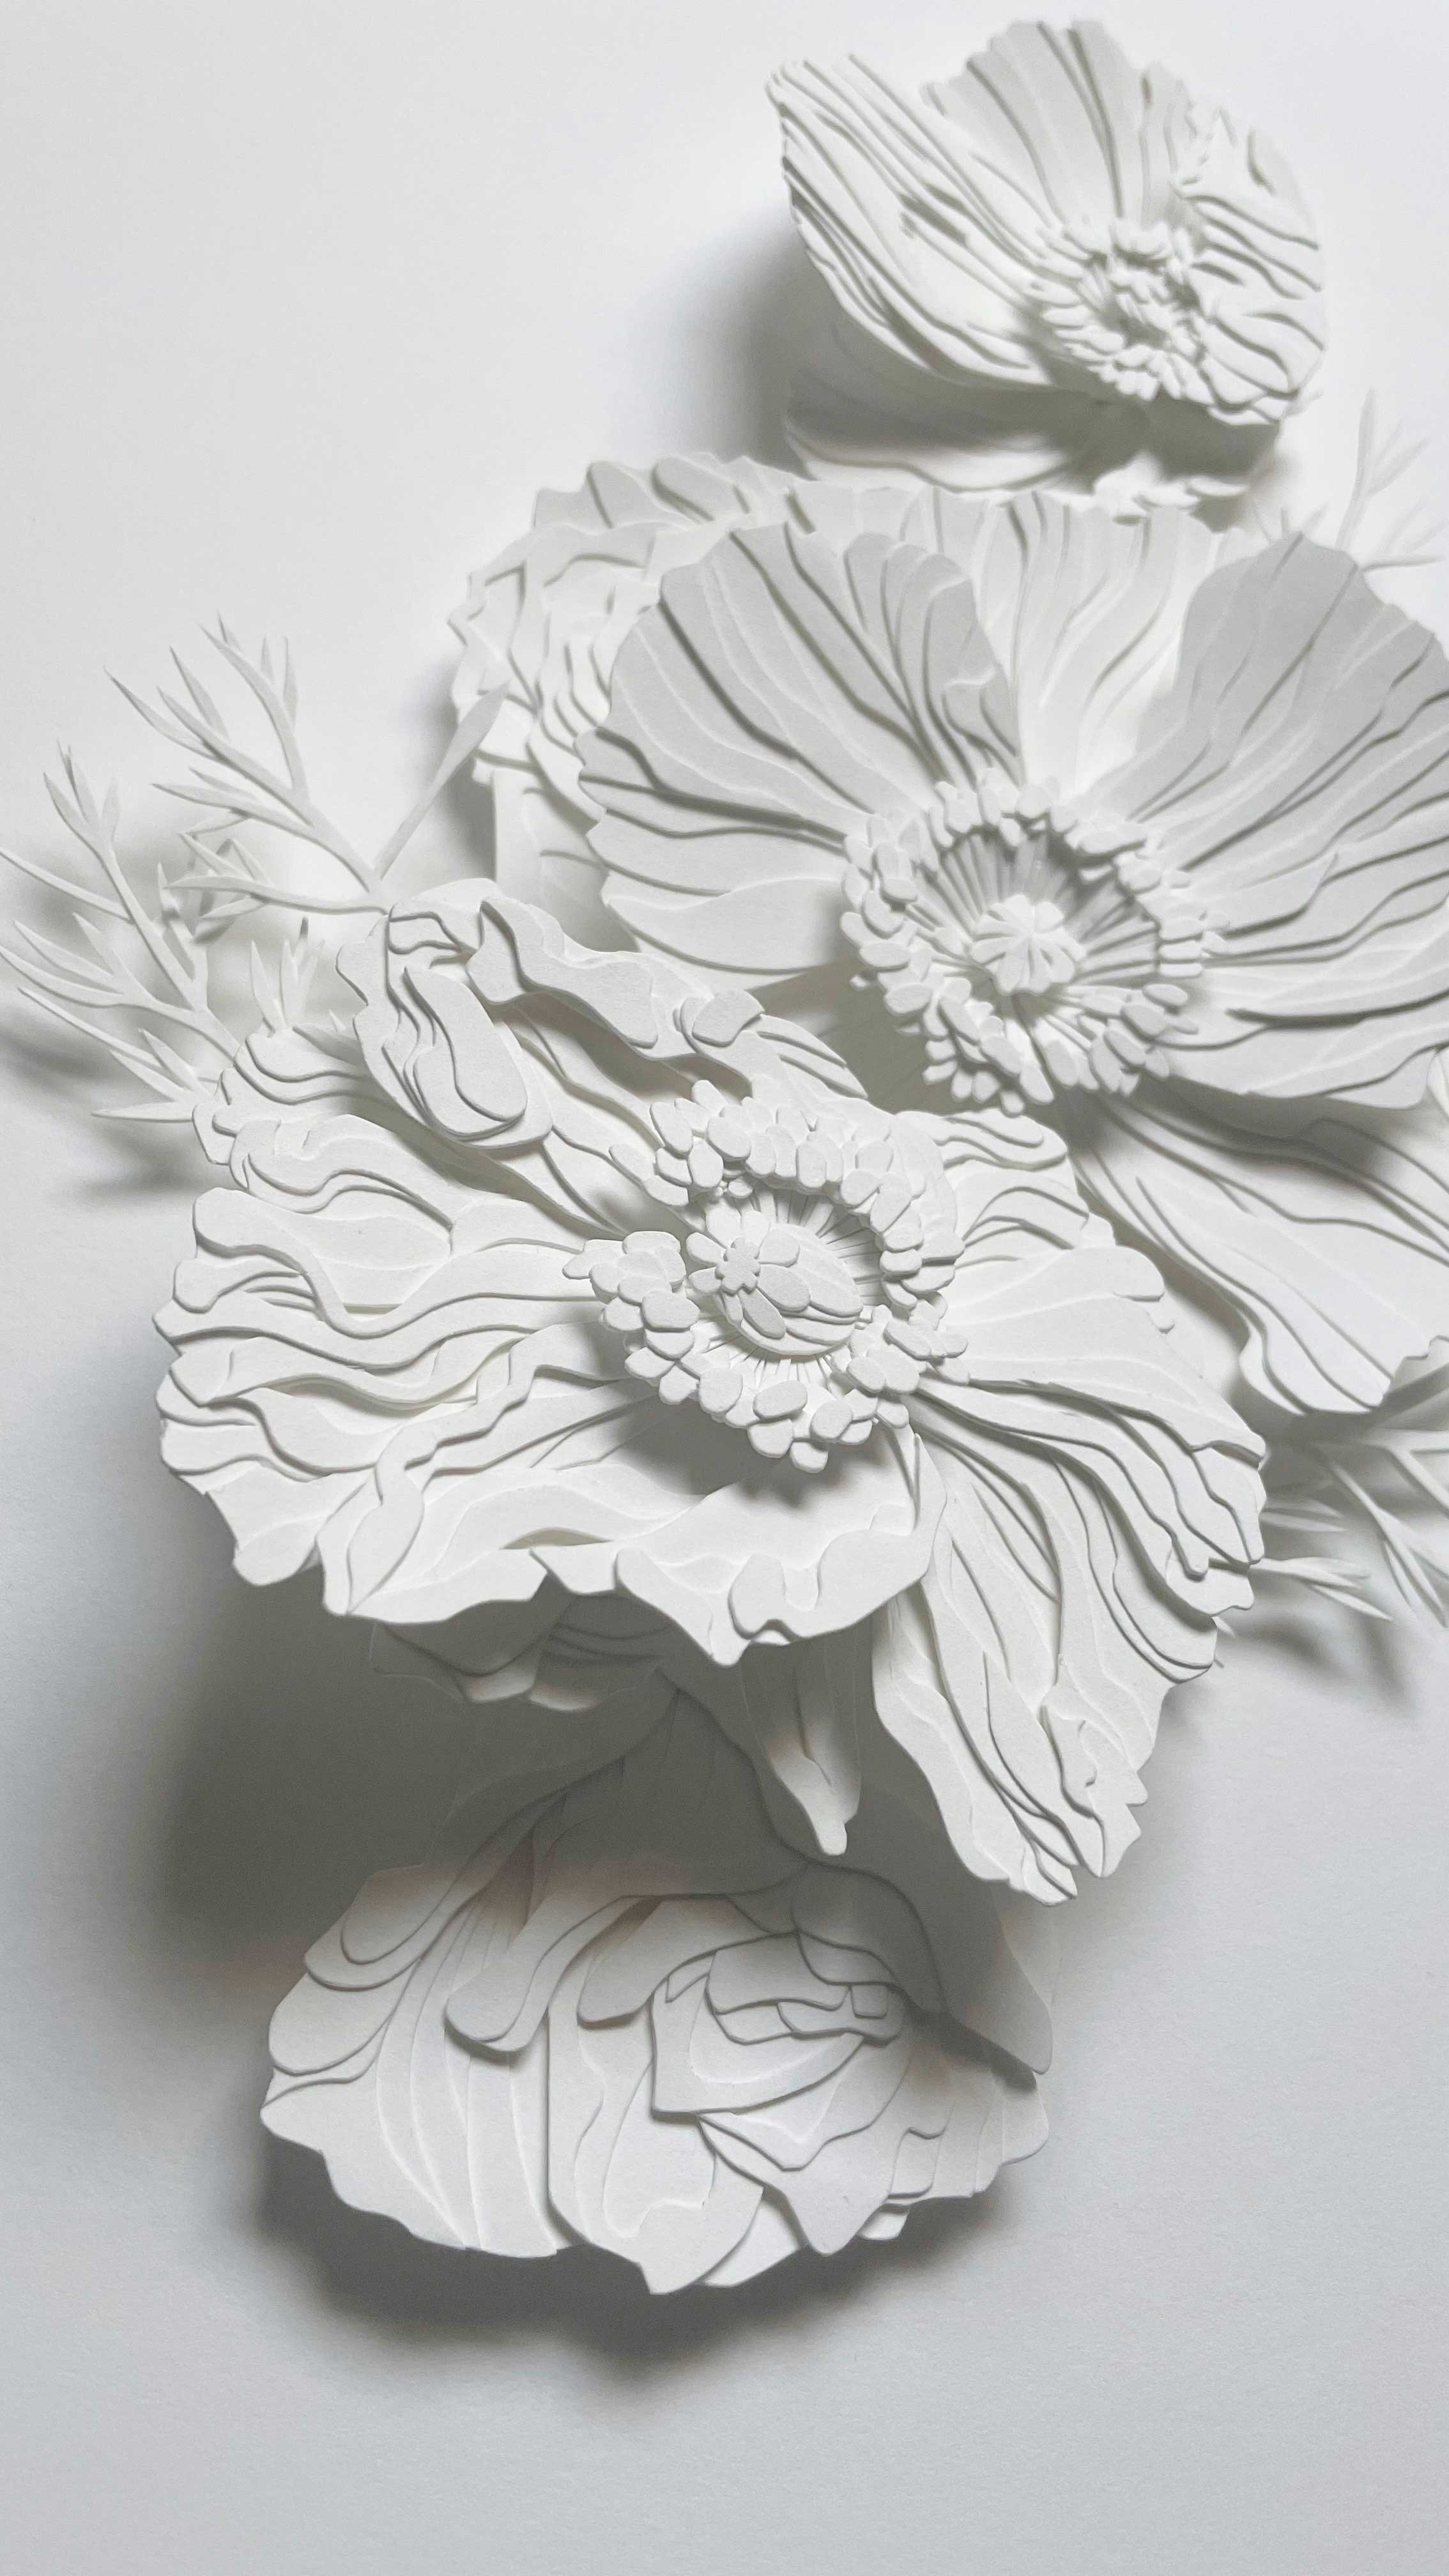 joey-bates-paper-art-sculpture-commission-4-2.jpg